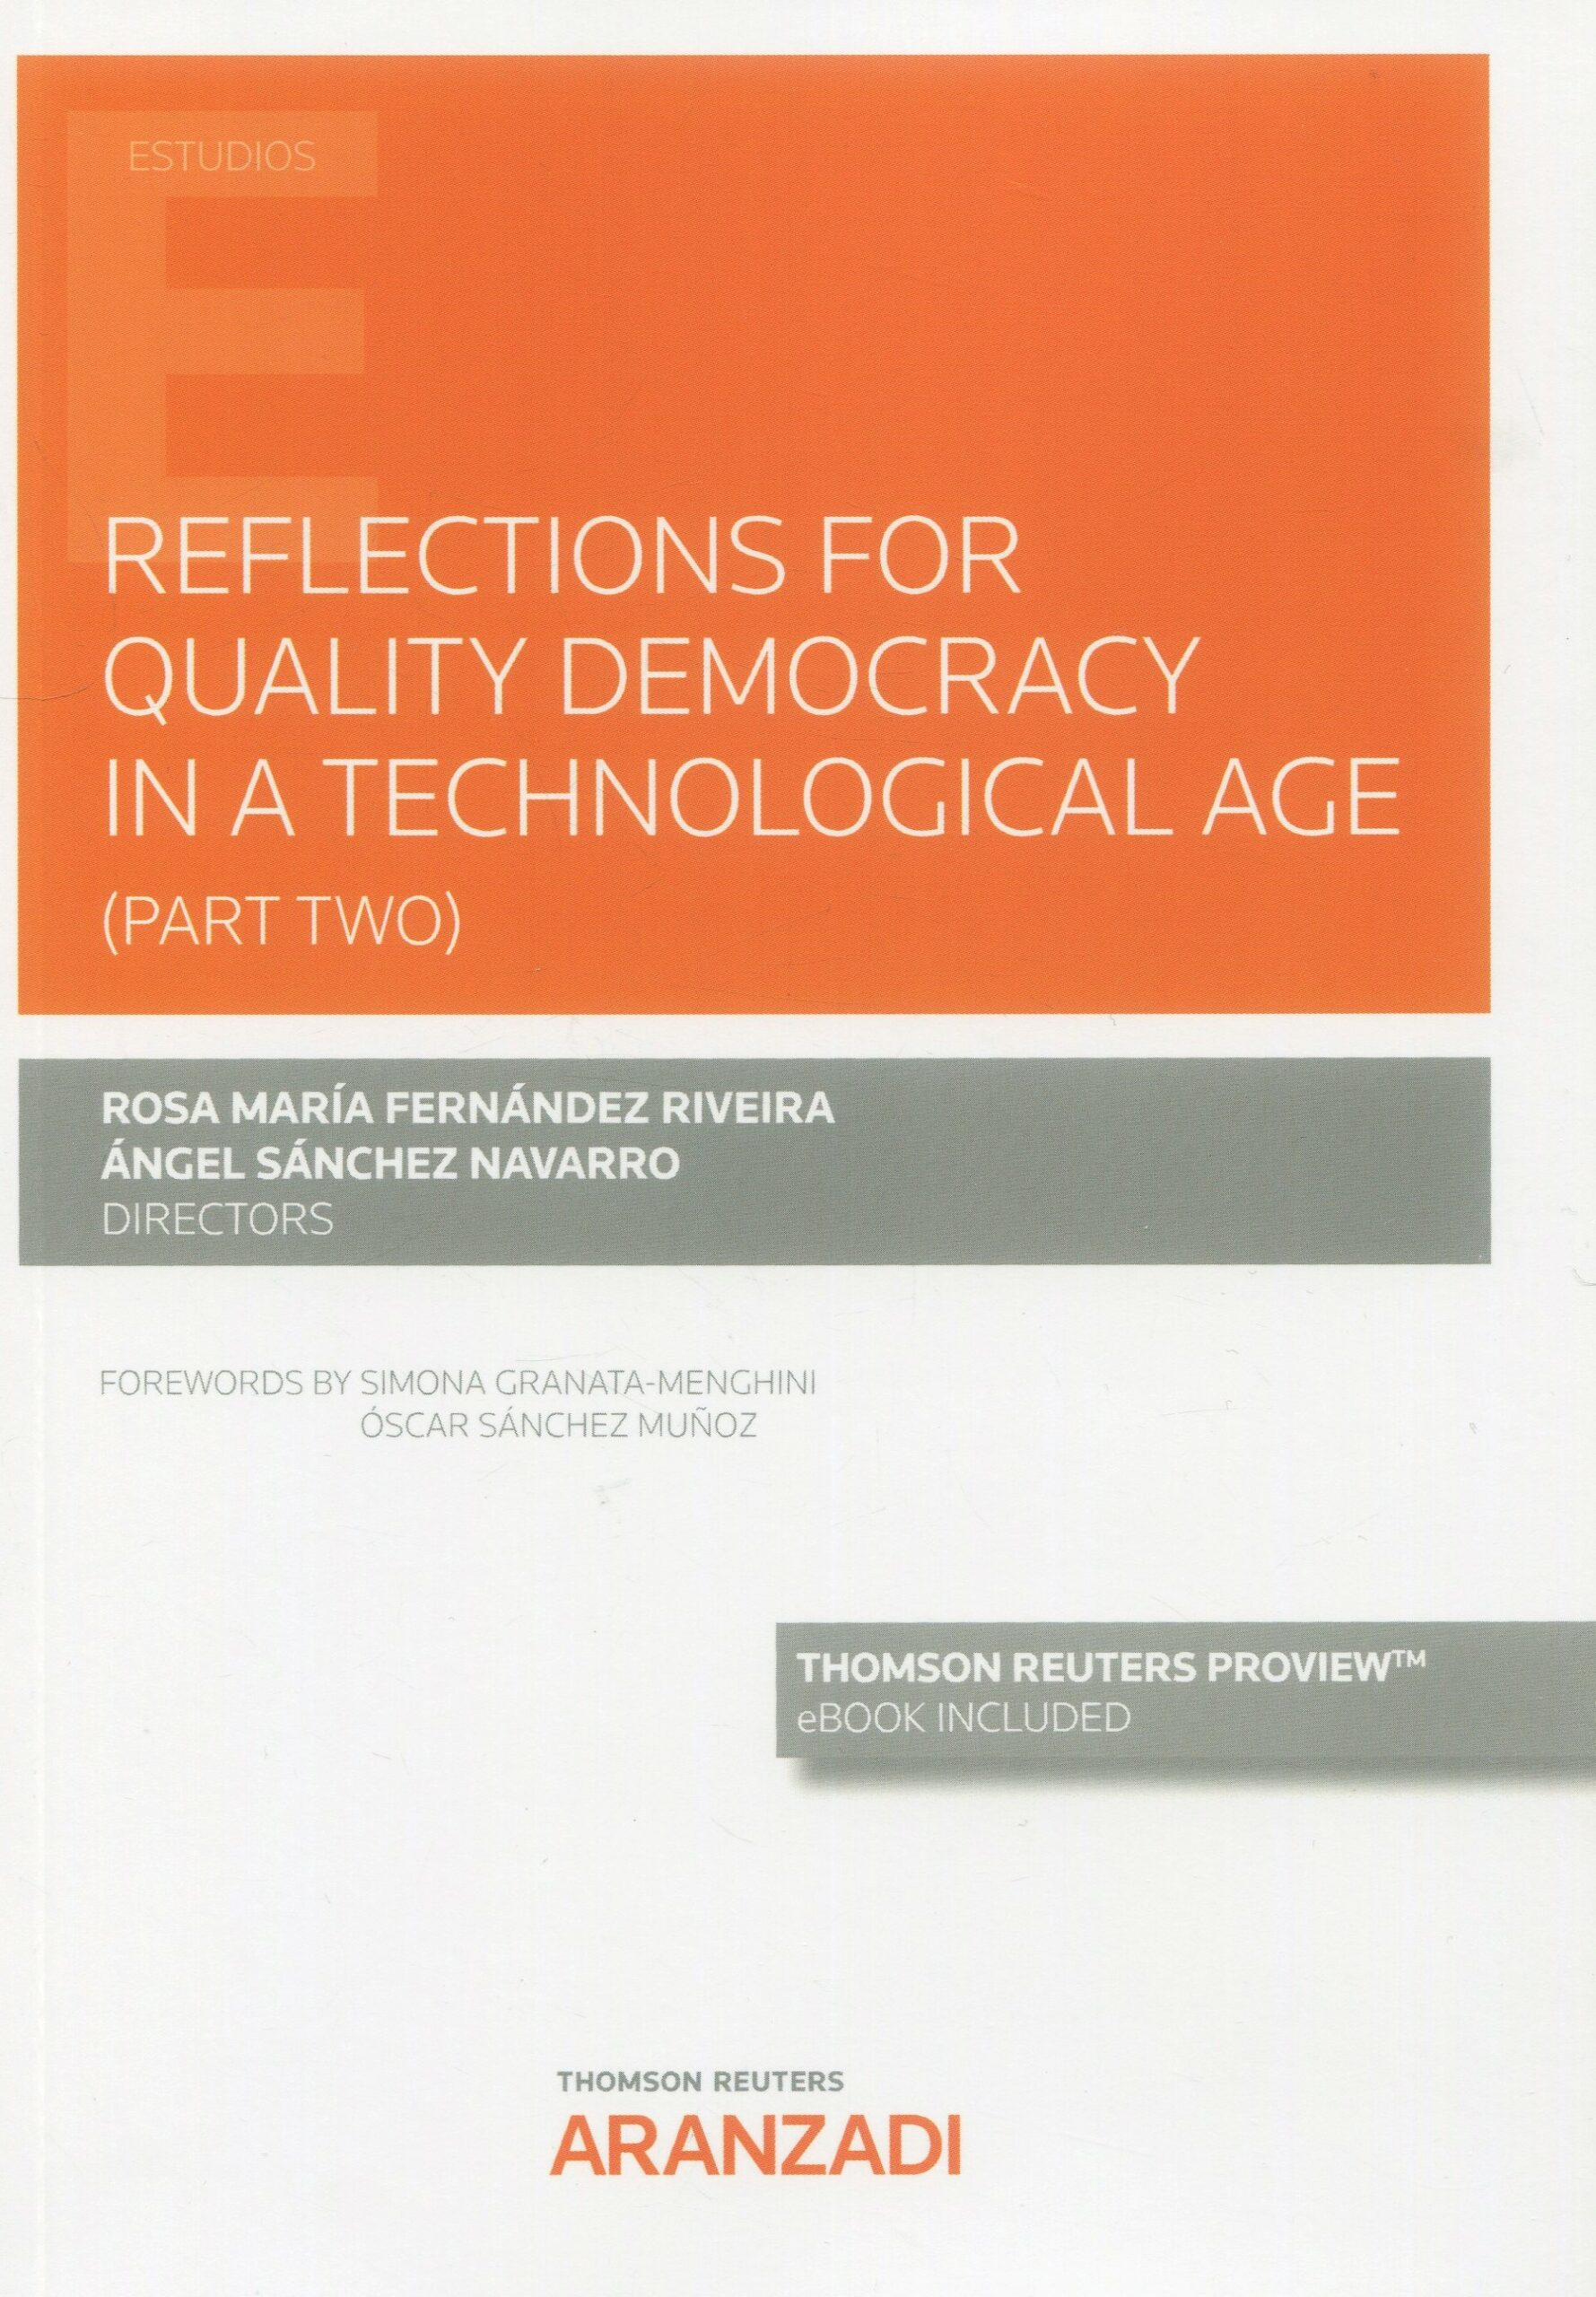 Imagen de portada del libro Reflections for Quality Democracy in a Technological Age